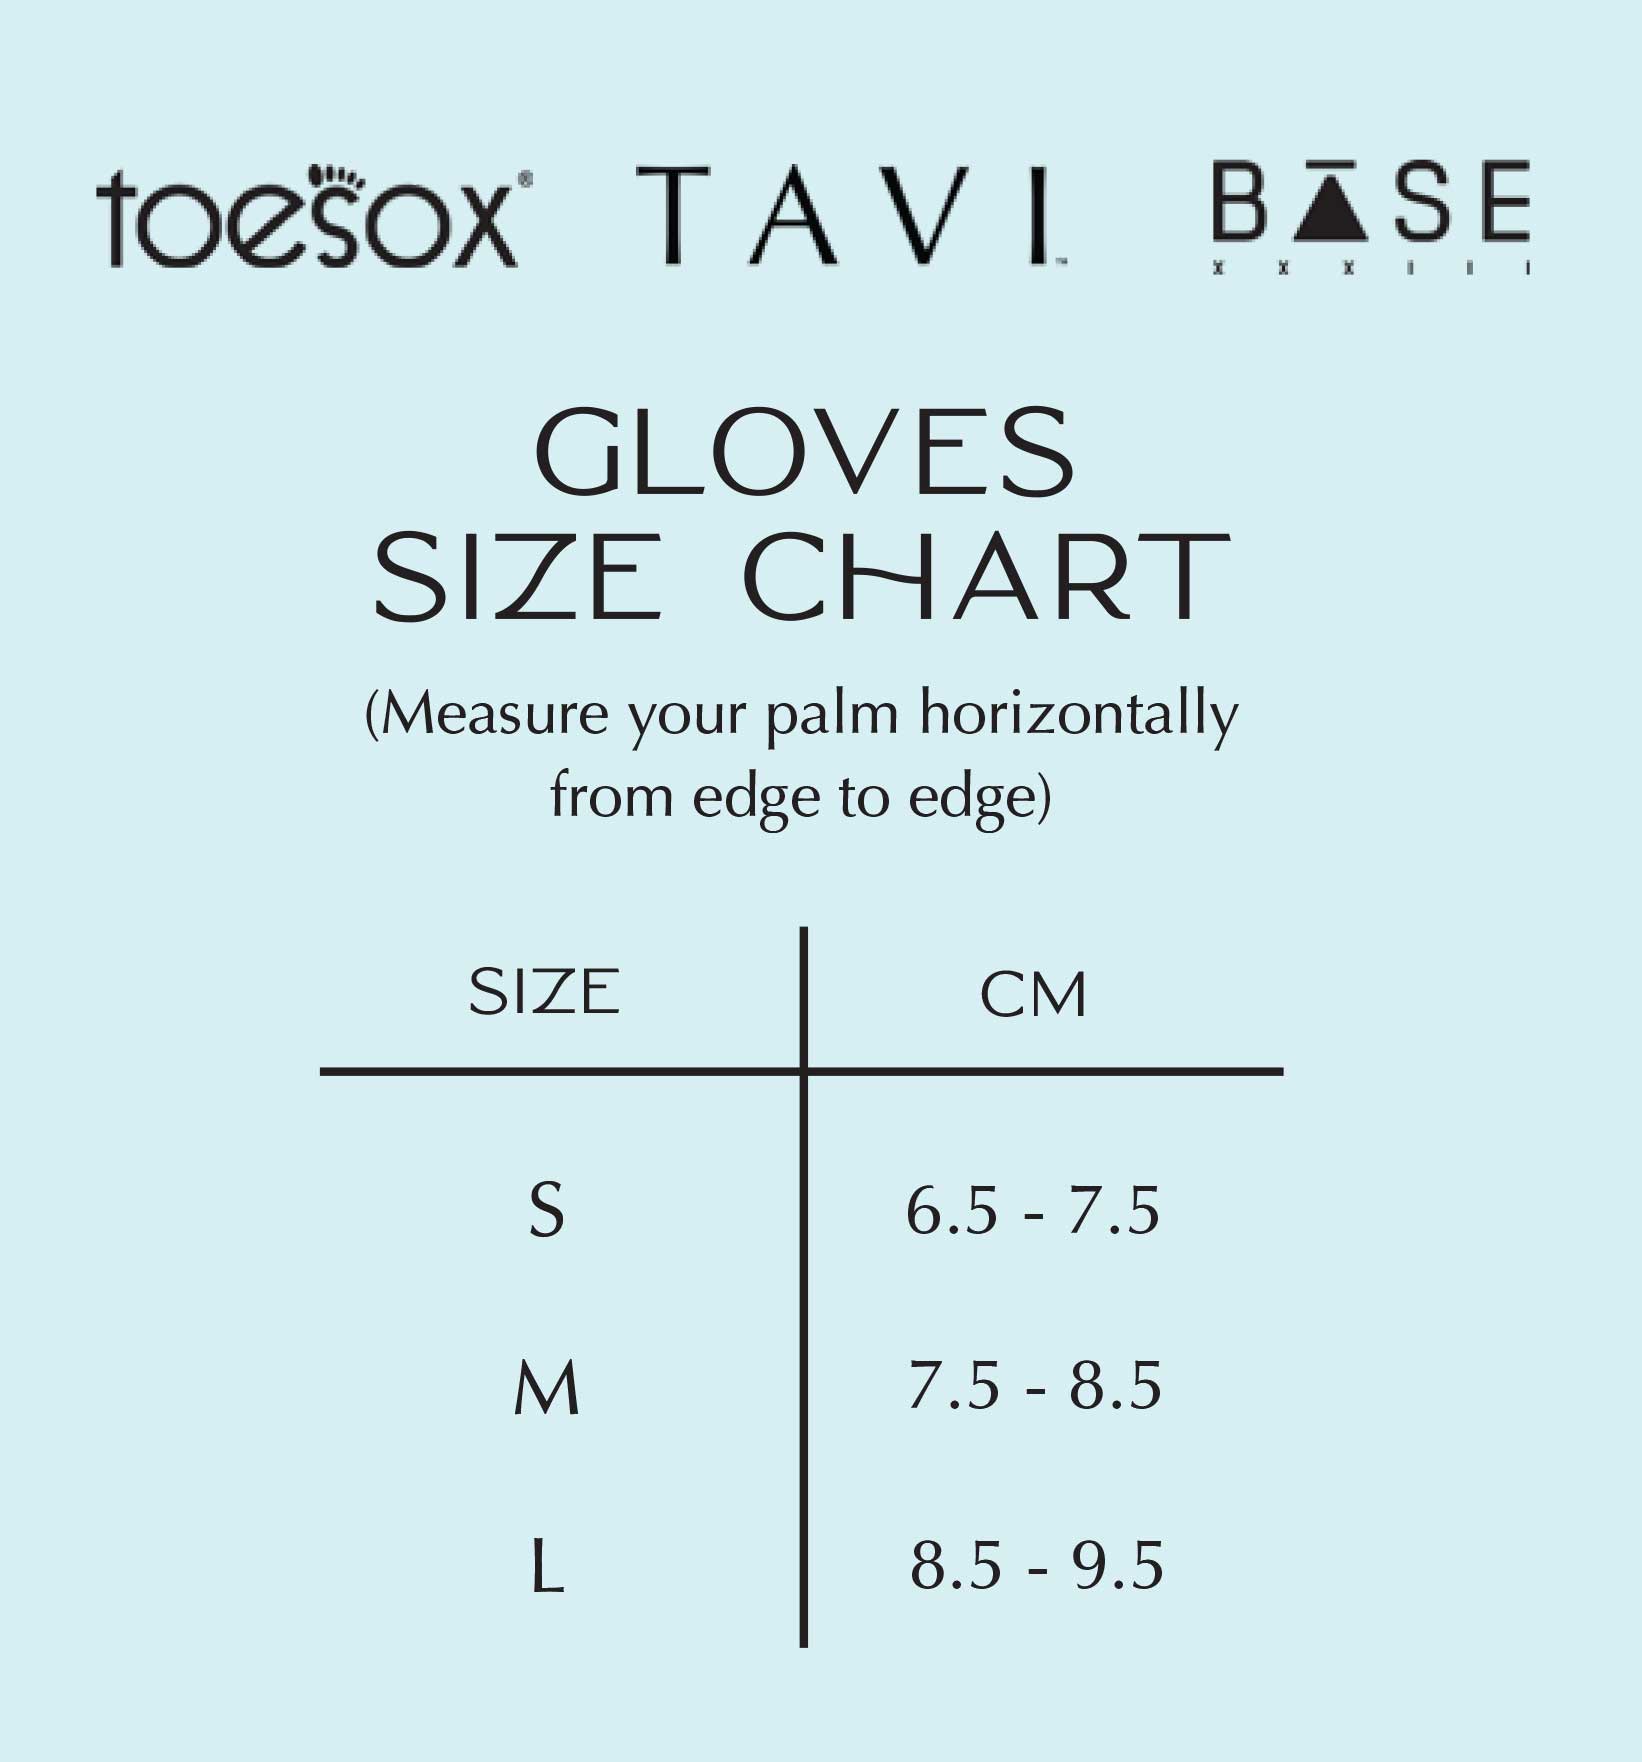 Base 33 gloves size chart